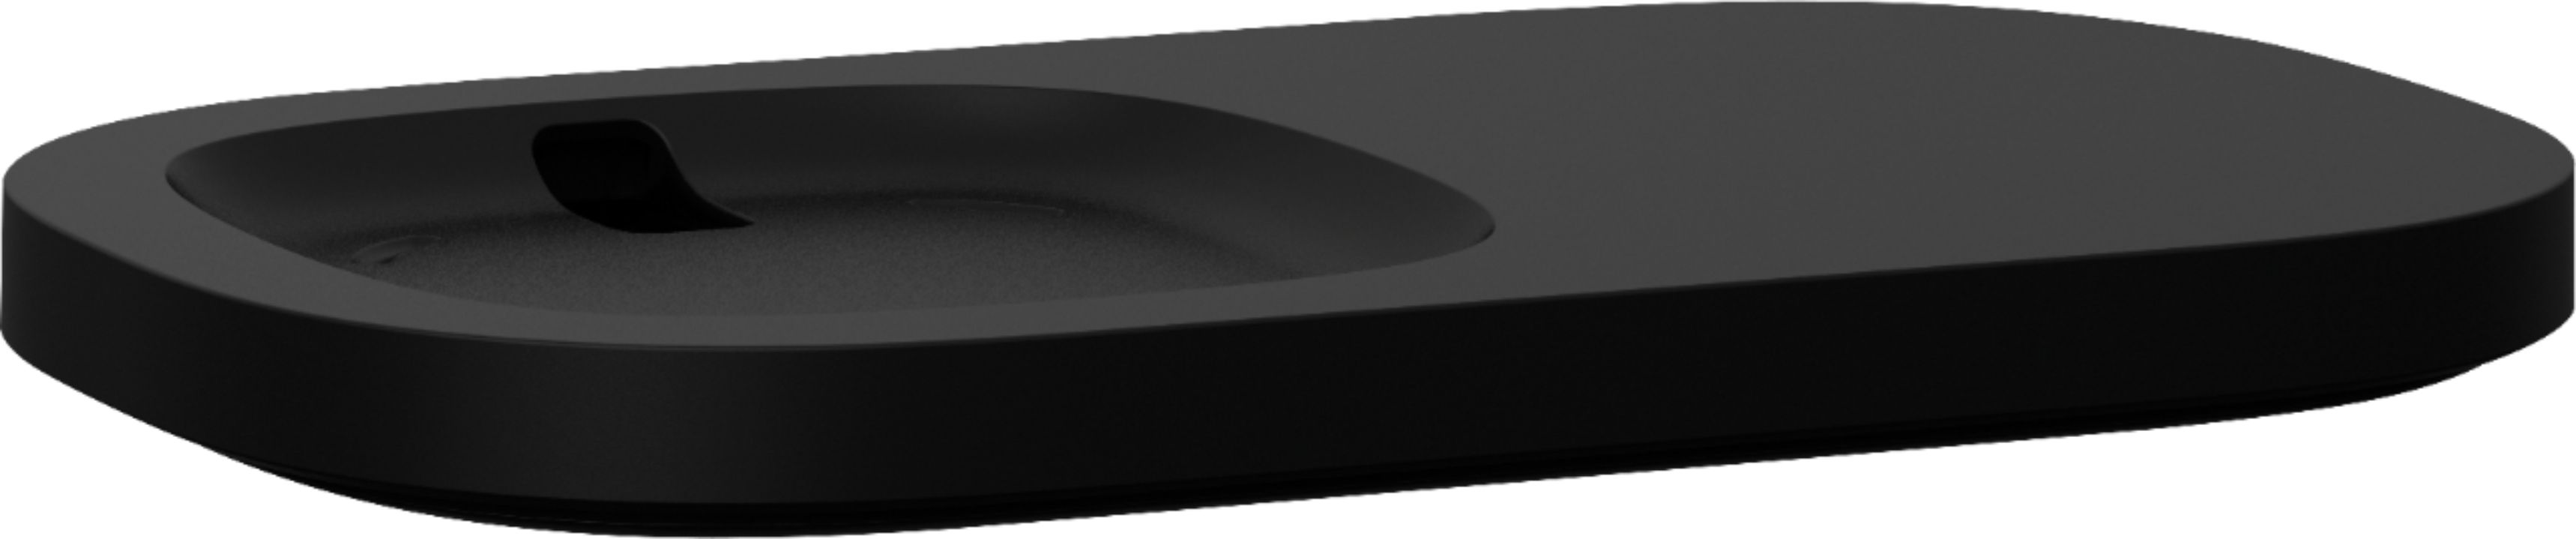 Angle View: Sonos - Move Charging Base - Black